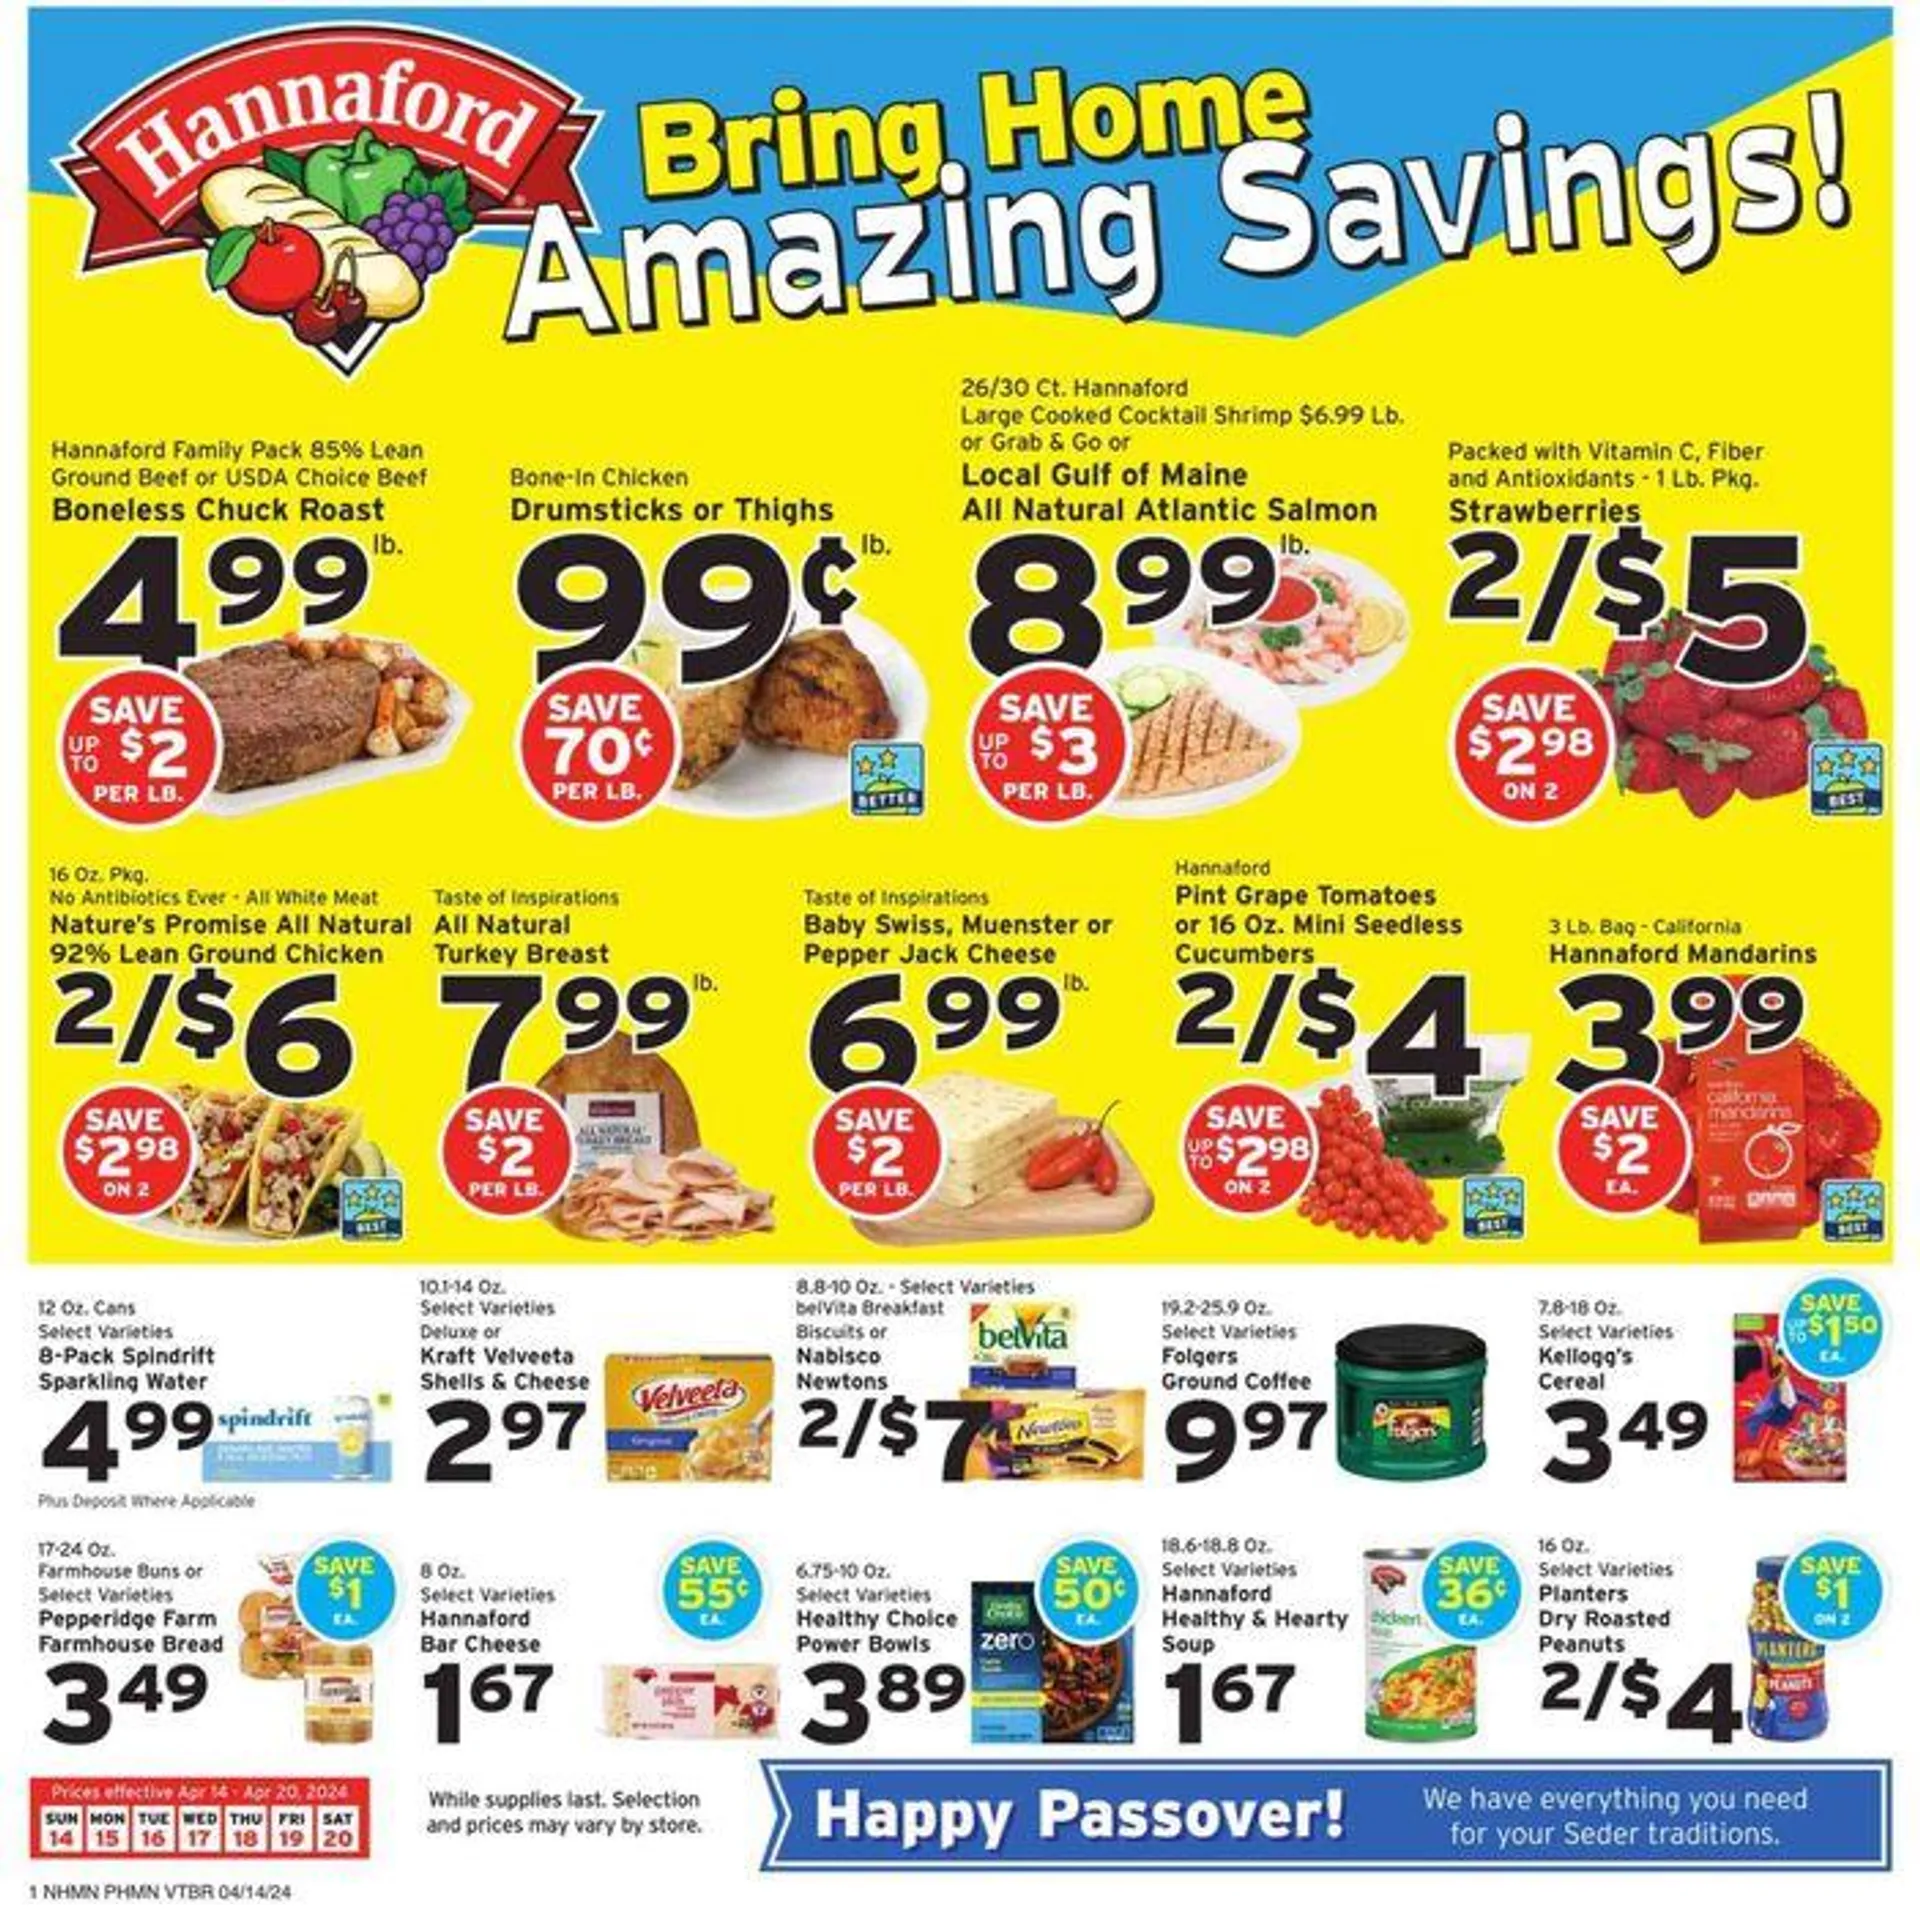 Bring Home Amazing Savings - 1